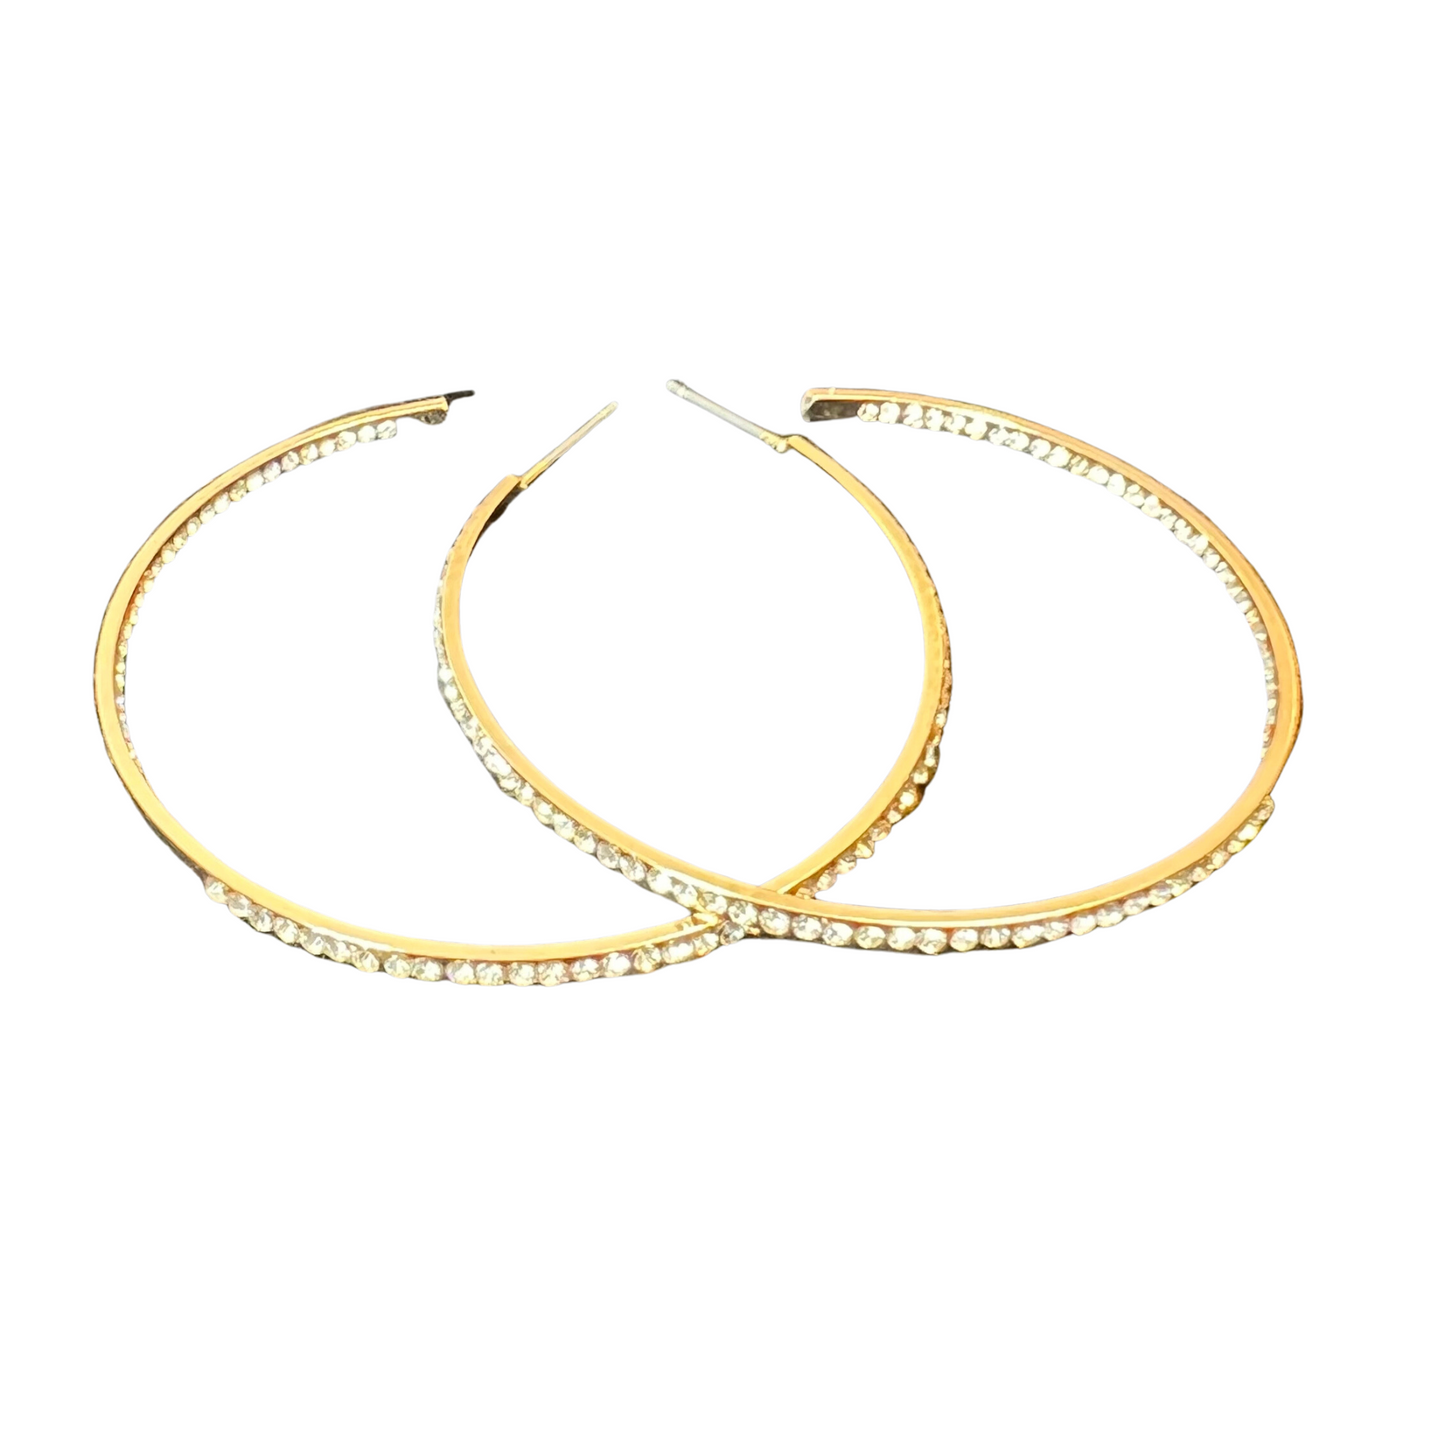 rhinestone lined hoops in gold